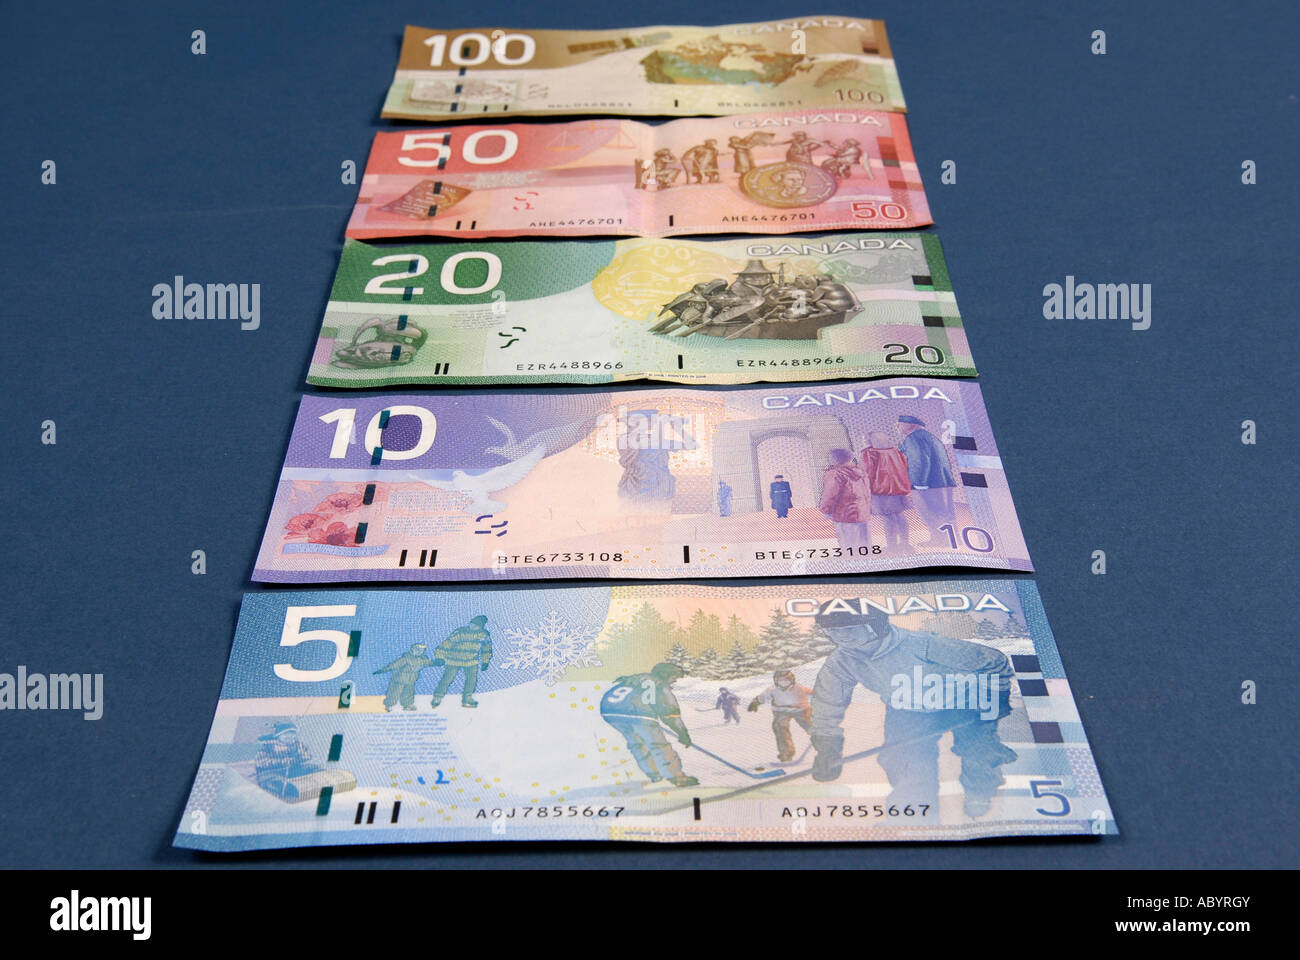 5 Five Ten 10 Twenty 20 Fifty 50 One hundred 100 Canadian Canada cash money dollar bills Stock Photo